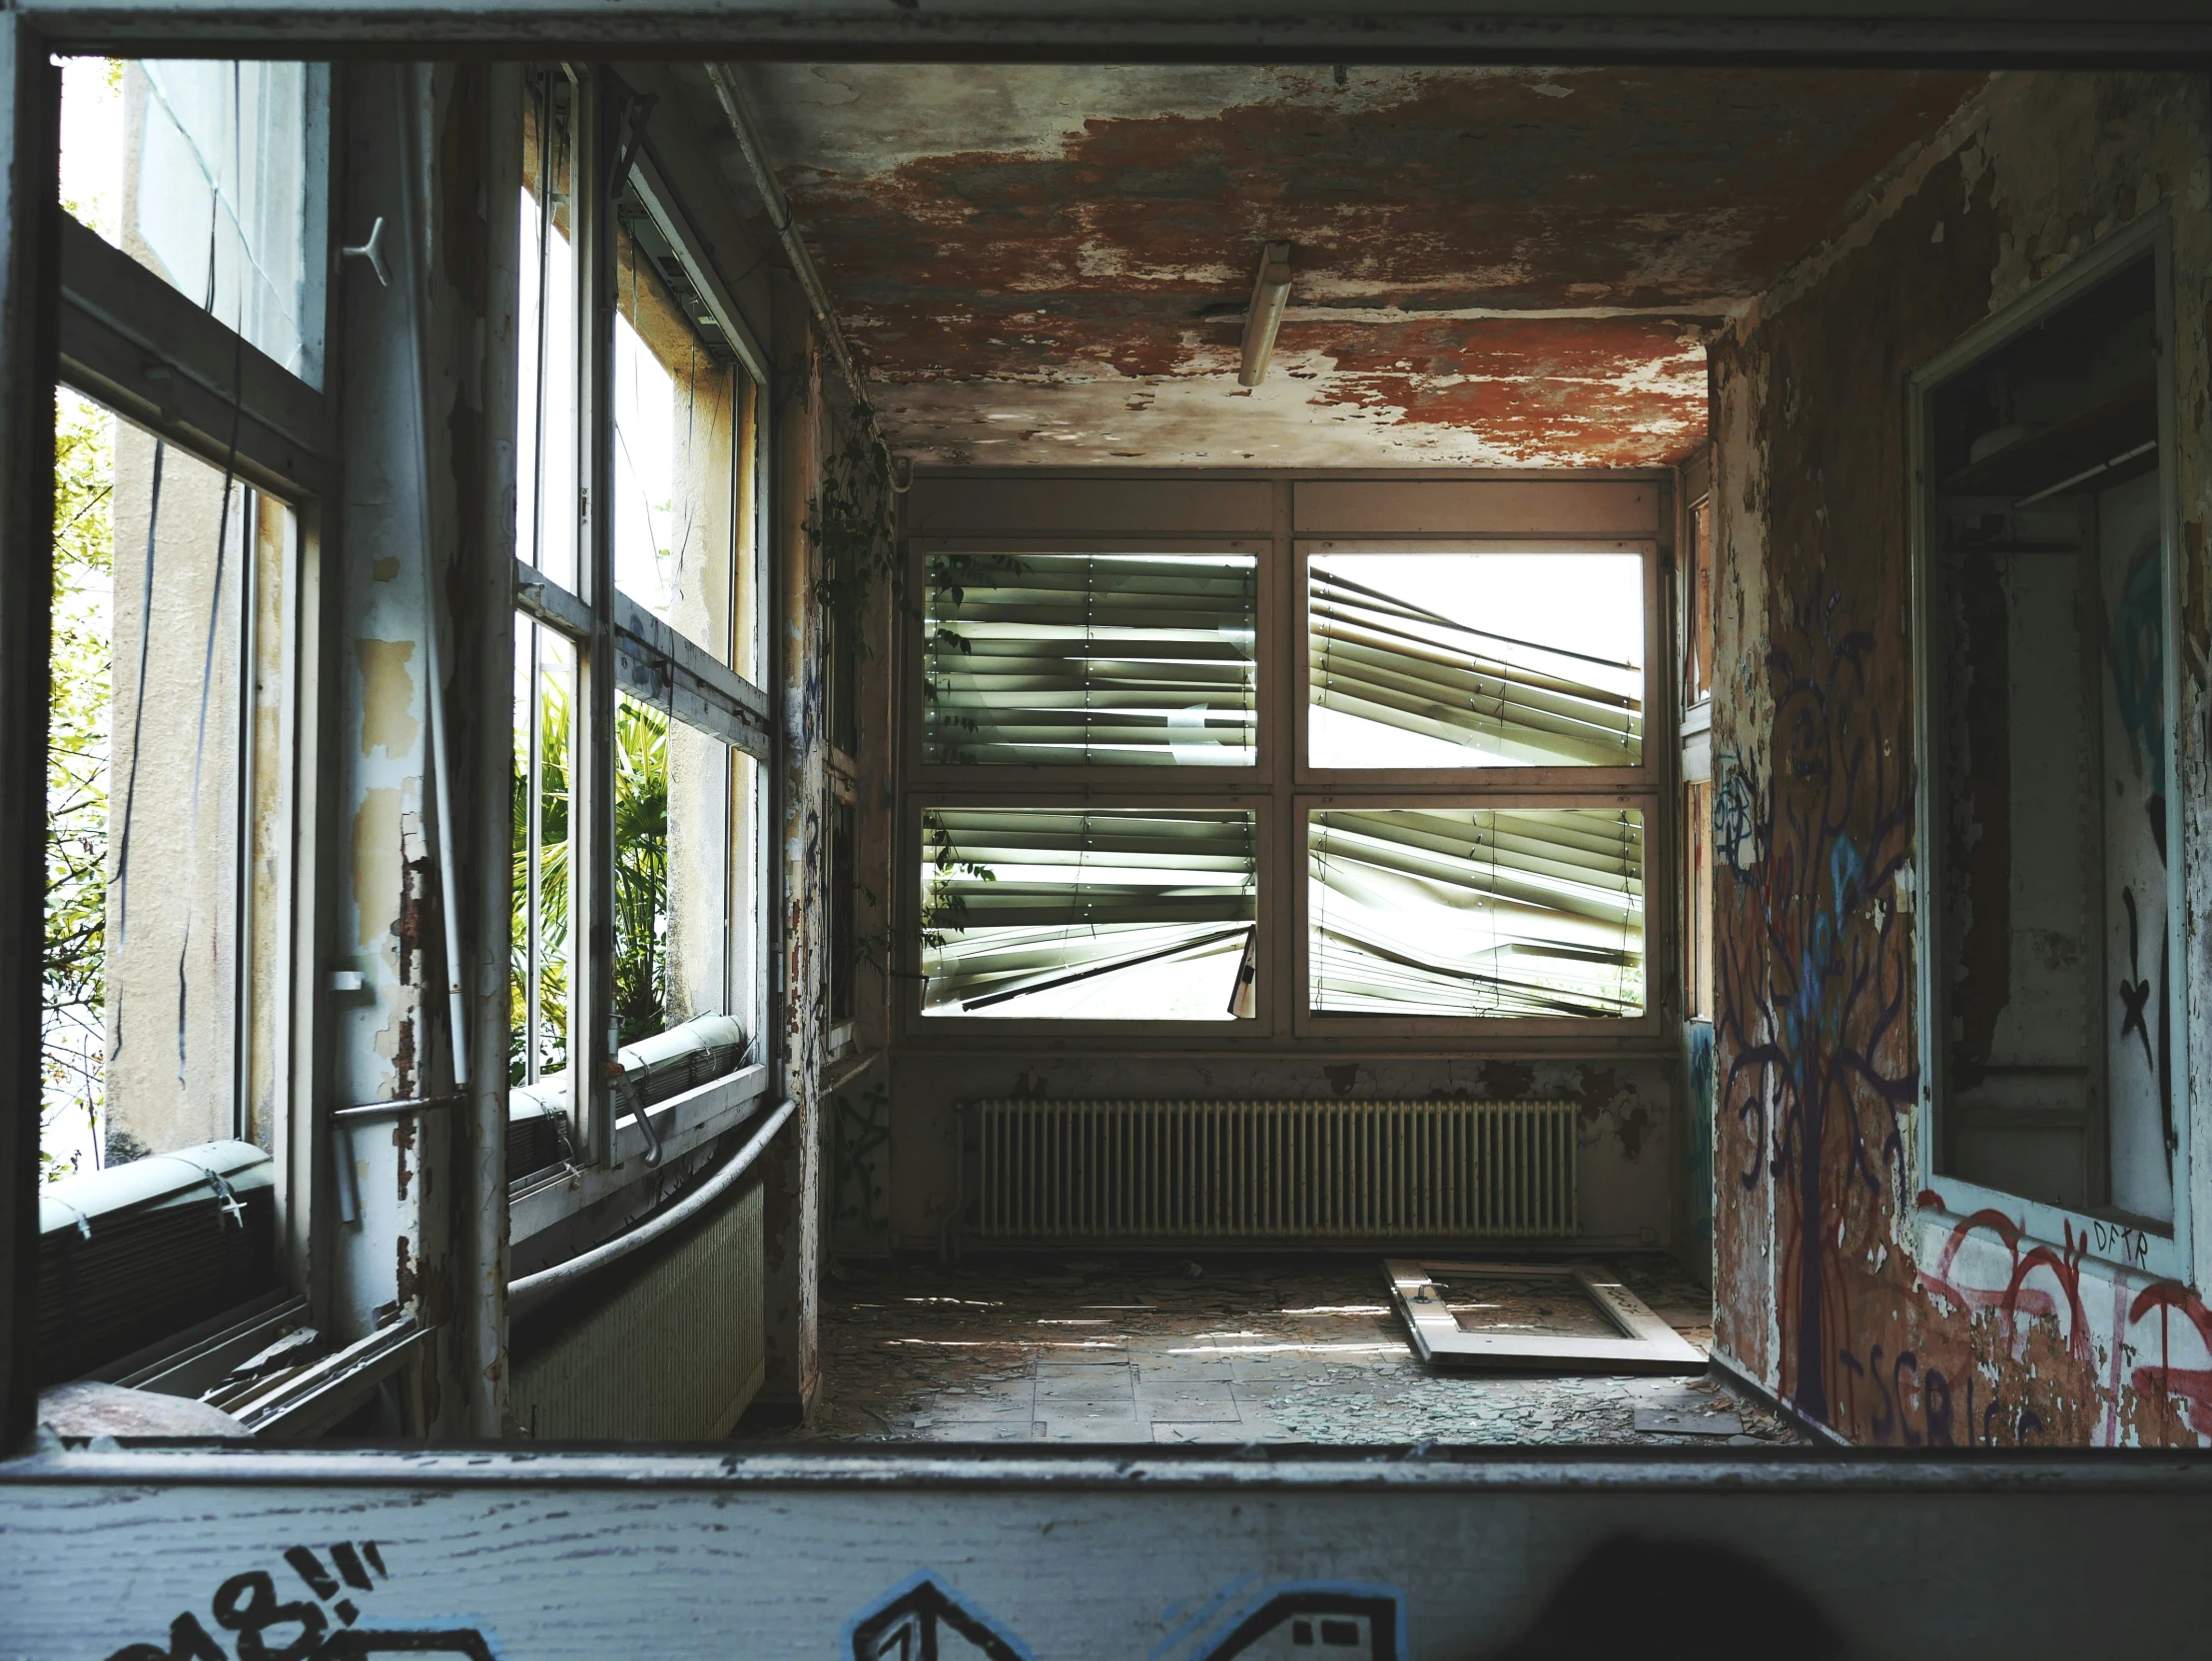 an open window in a rundown house next to some graffiti